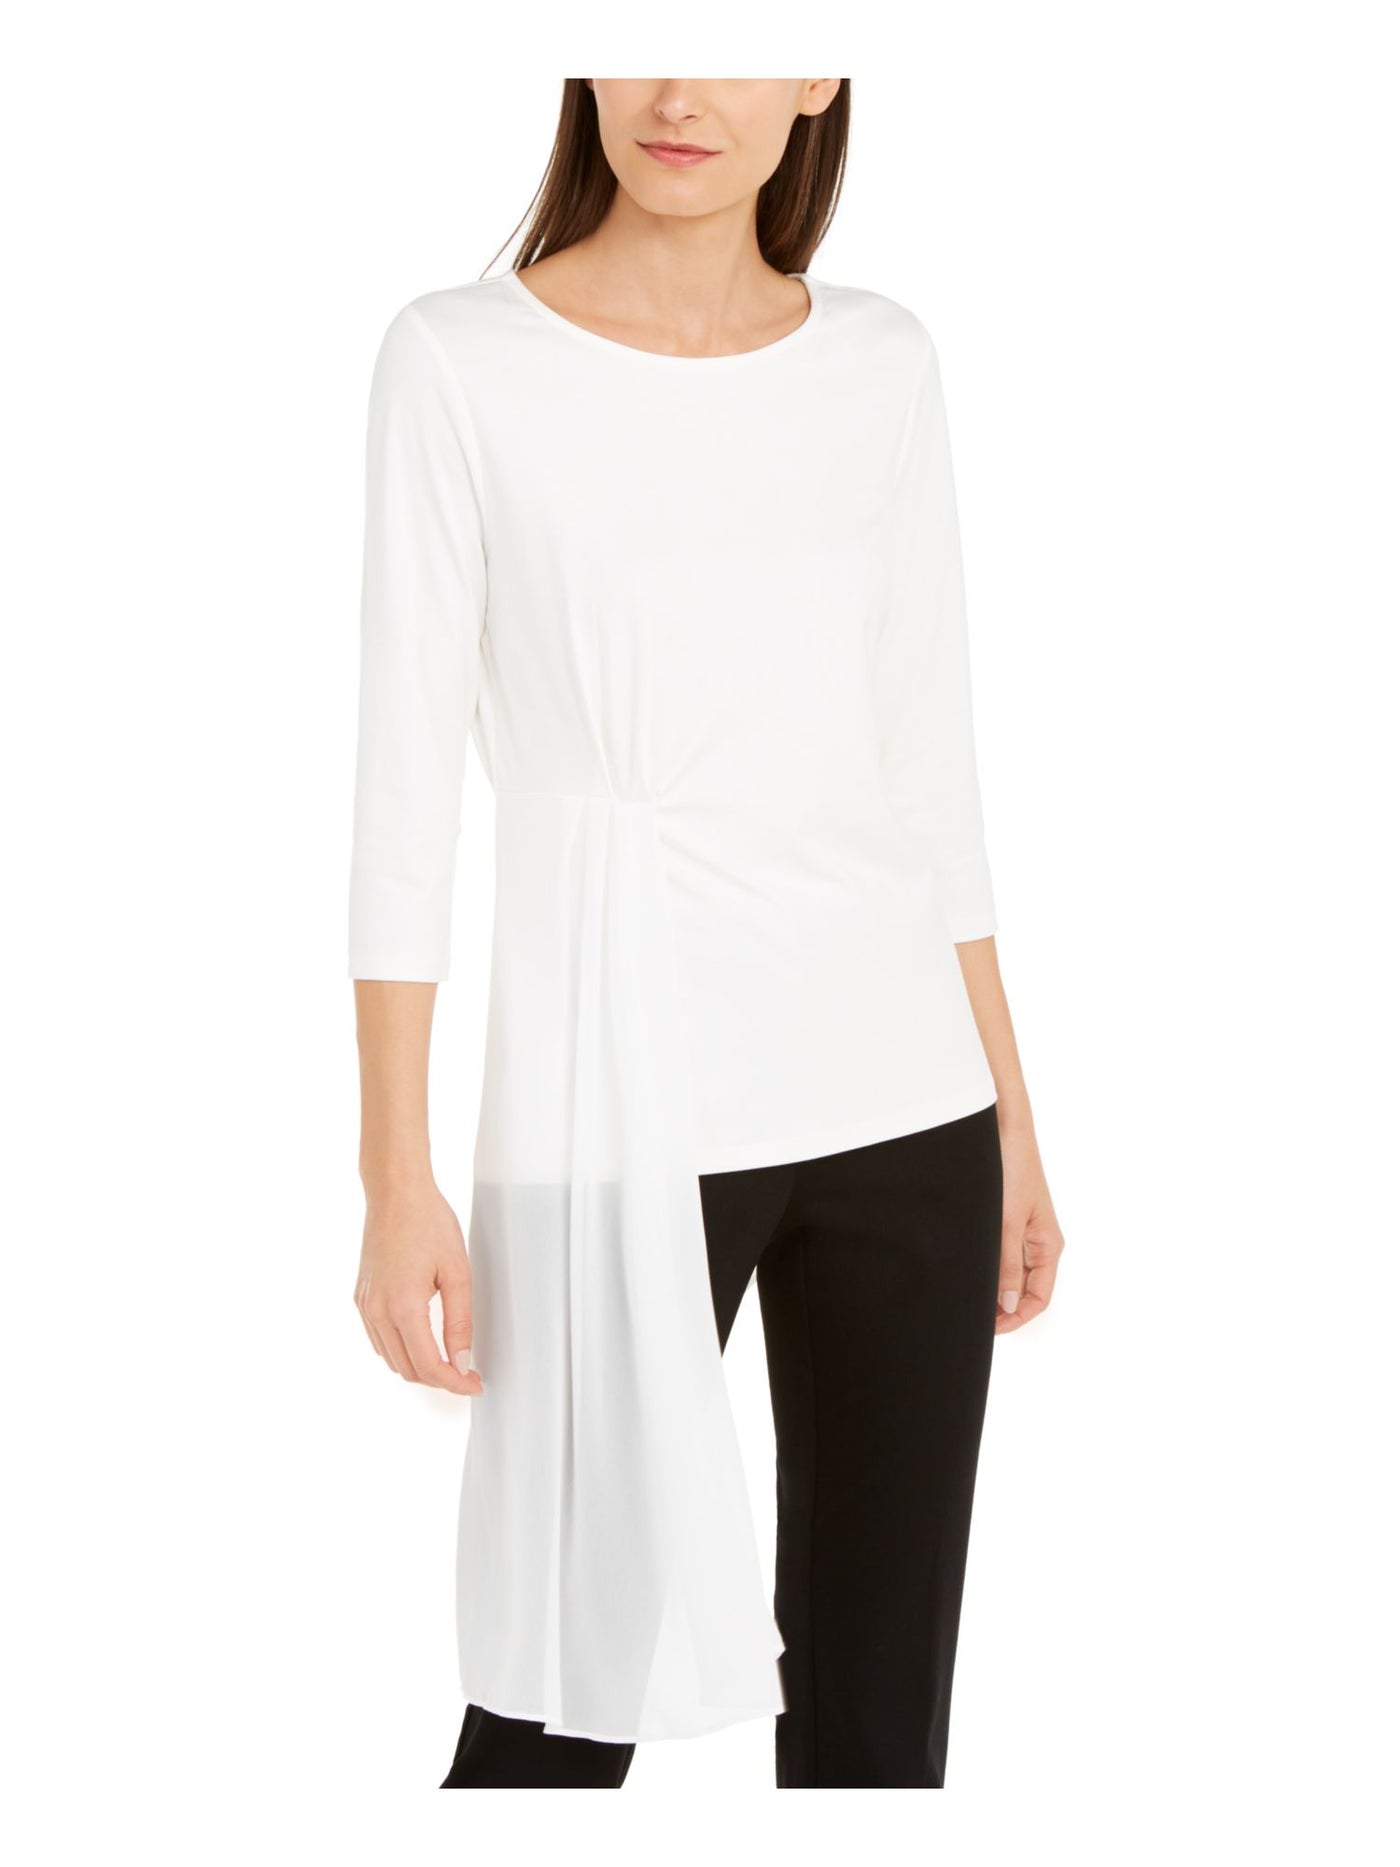 ALFANI Womens White 3/4 Sleeve Open Cardigan Sweater M